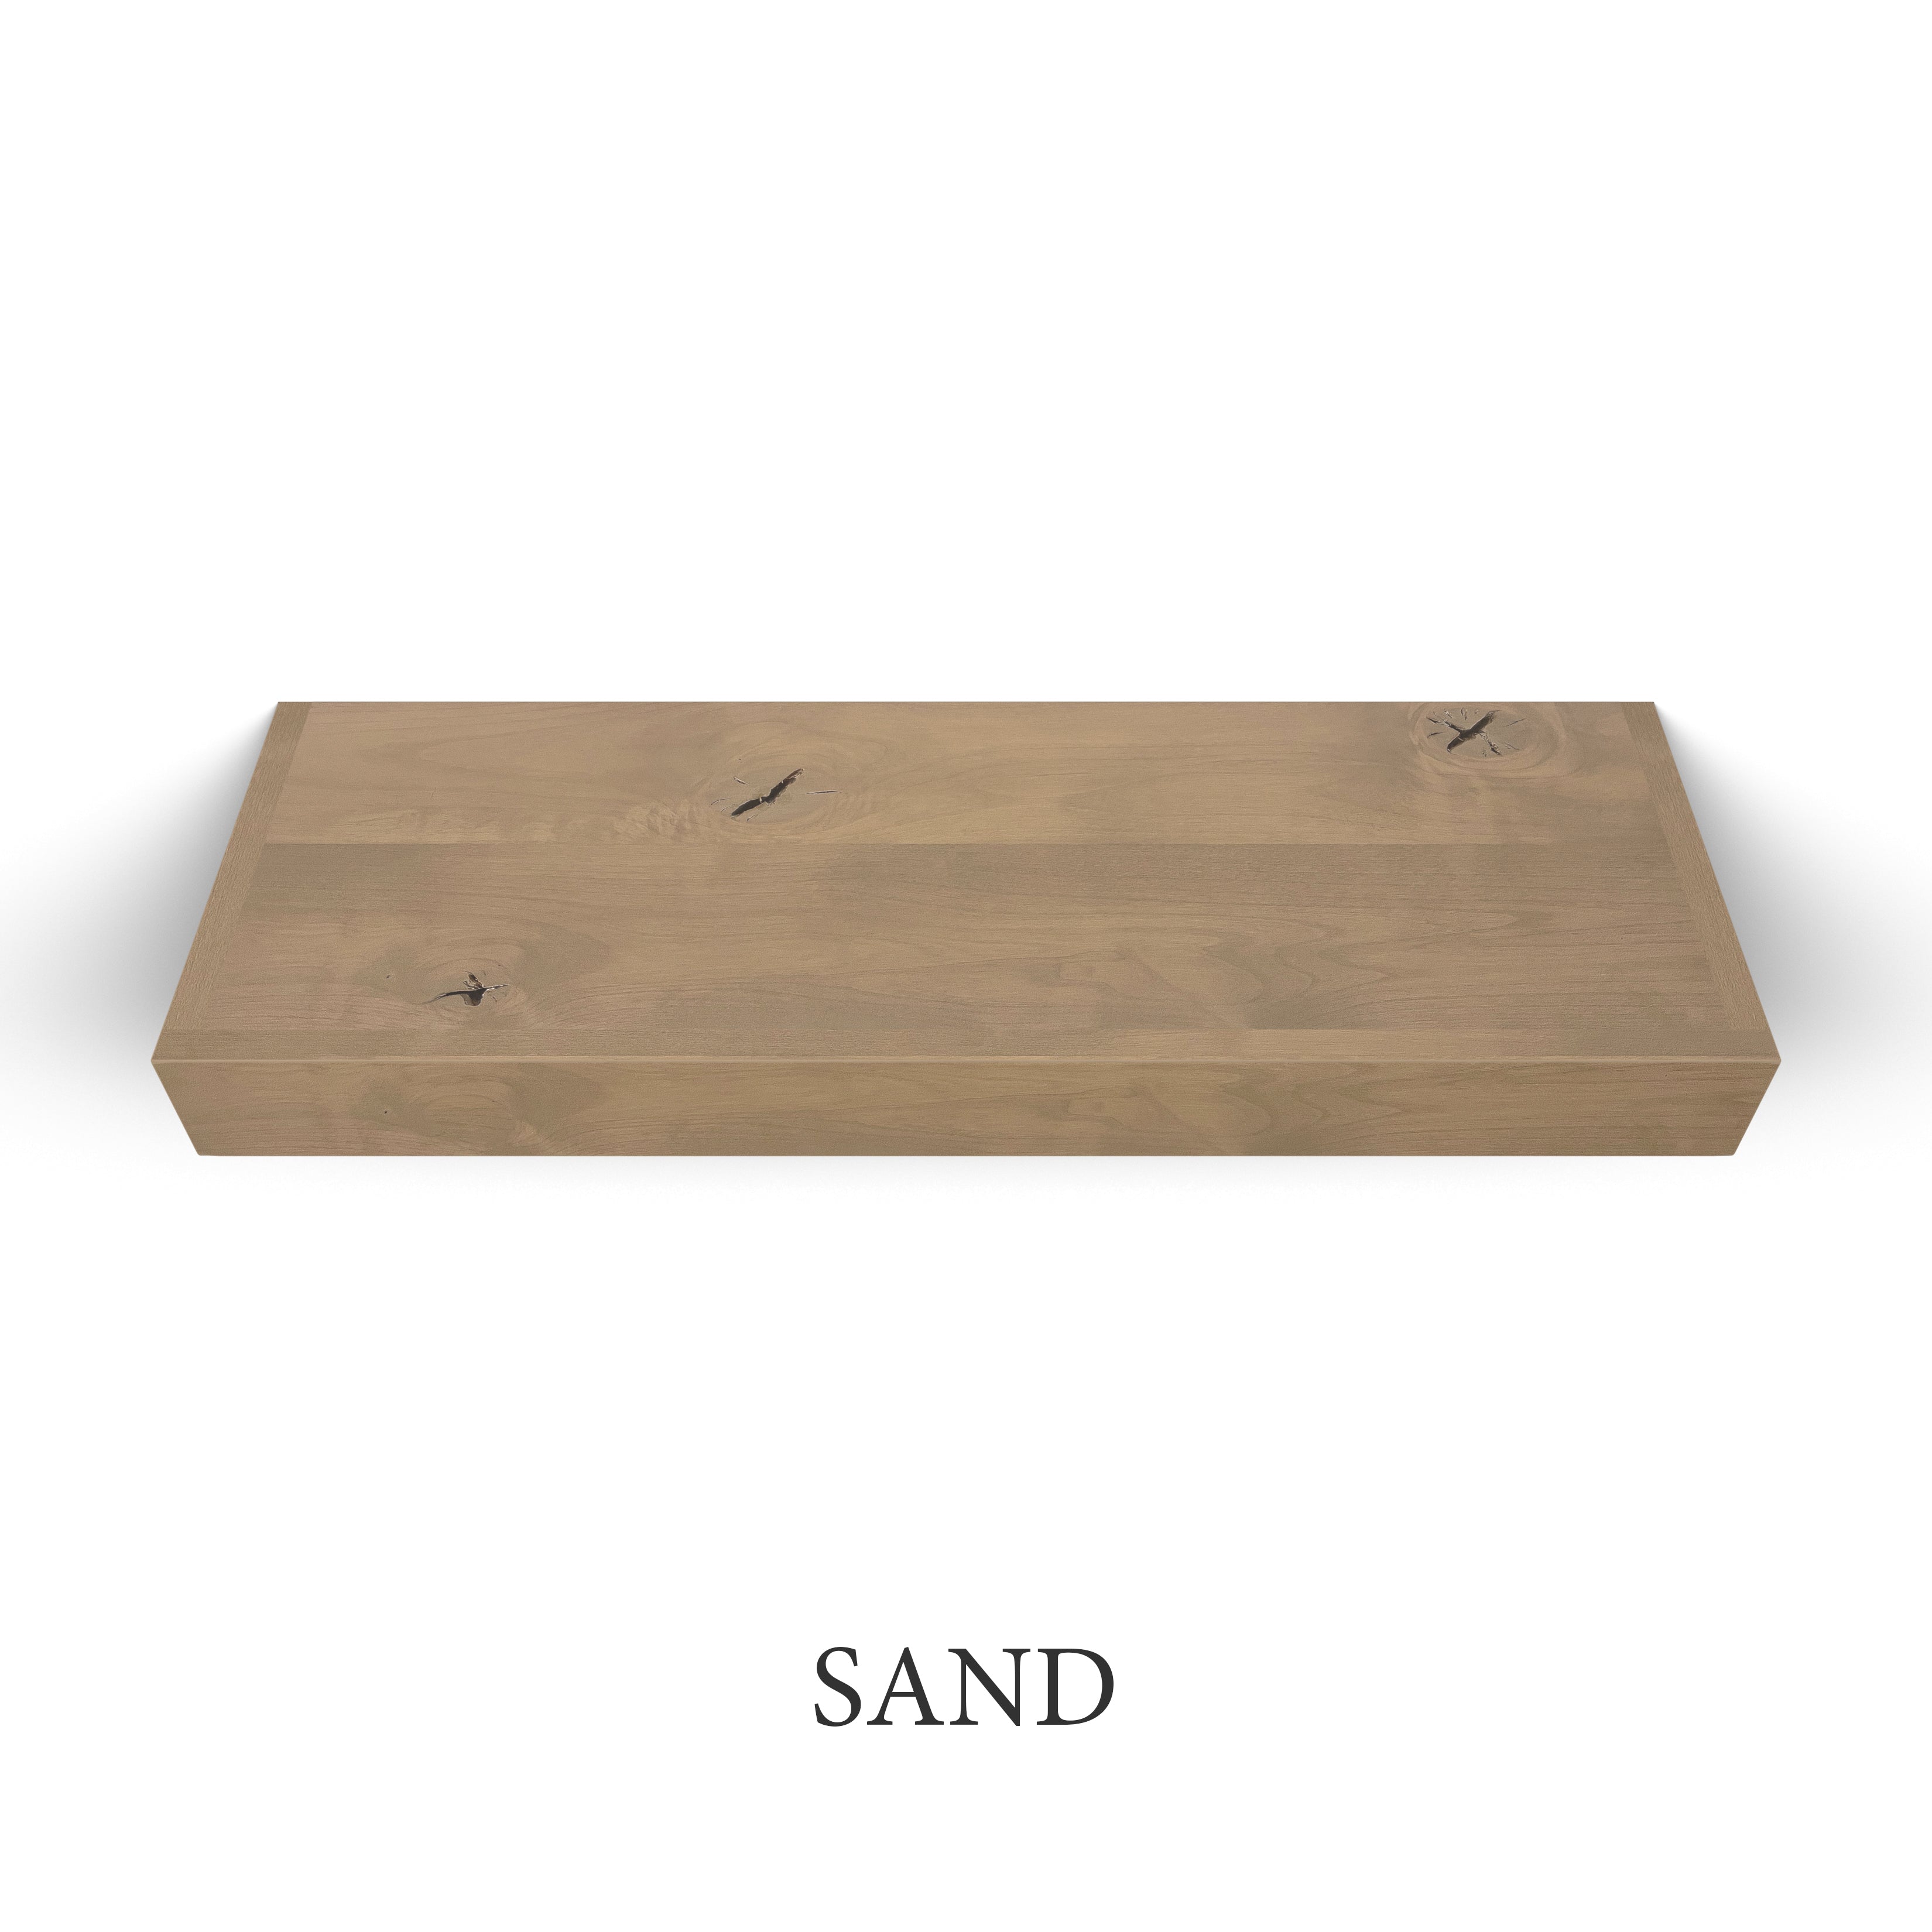 sand Rustic Alder 3 Inch Thick Floating Shelf